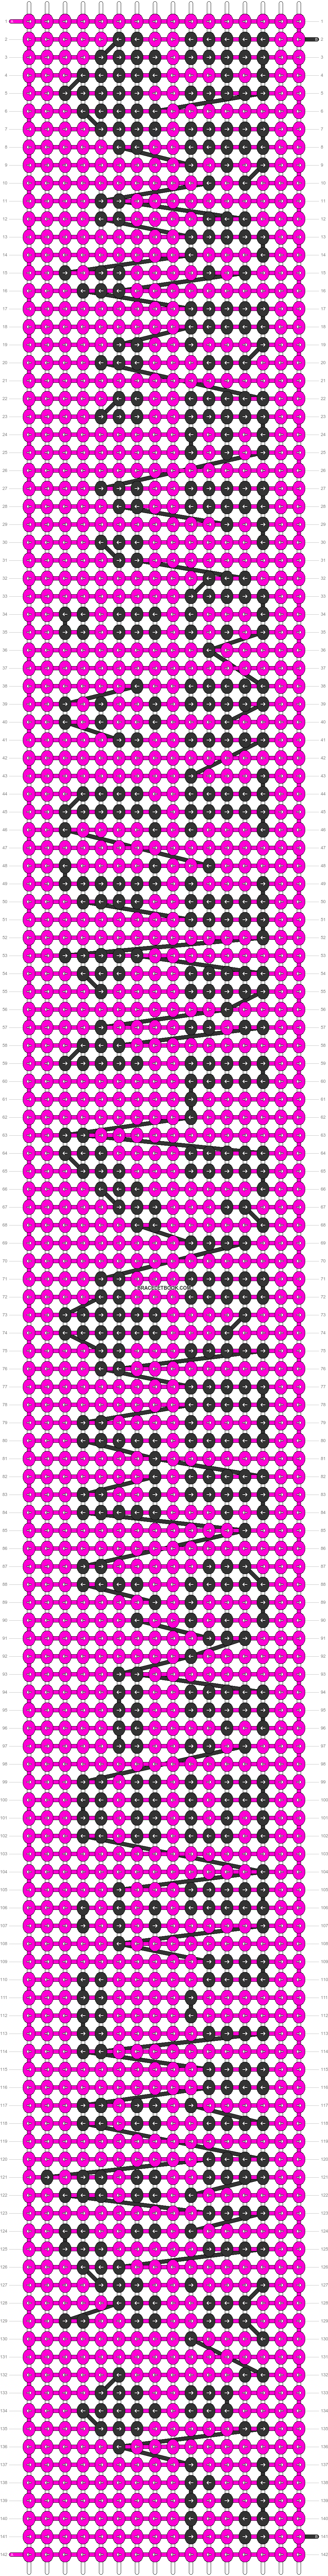 Alpha pattern #59423 variation #166905 pattern